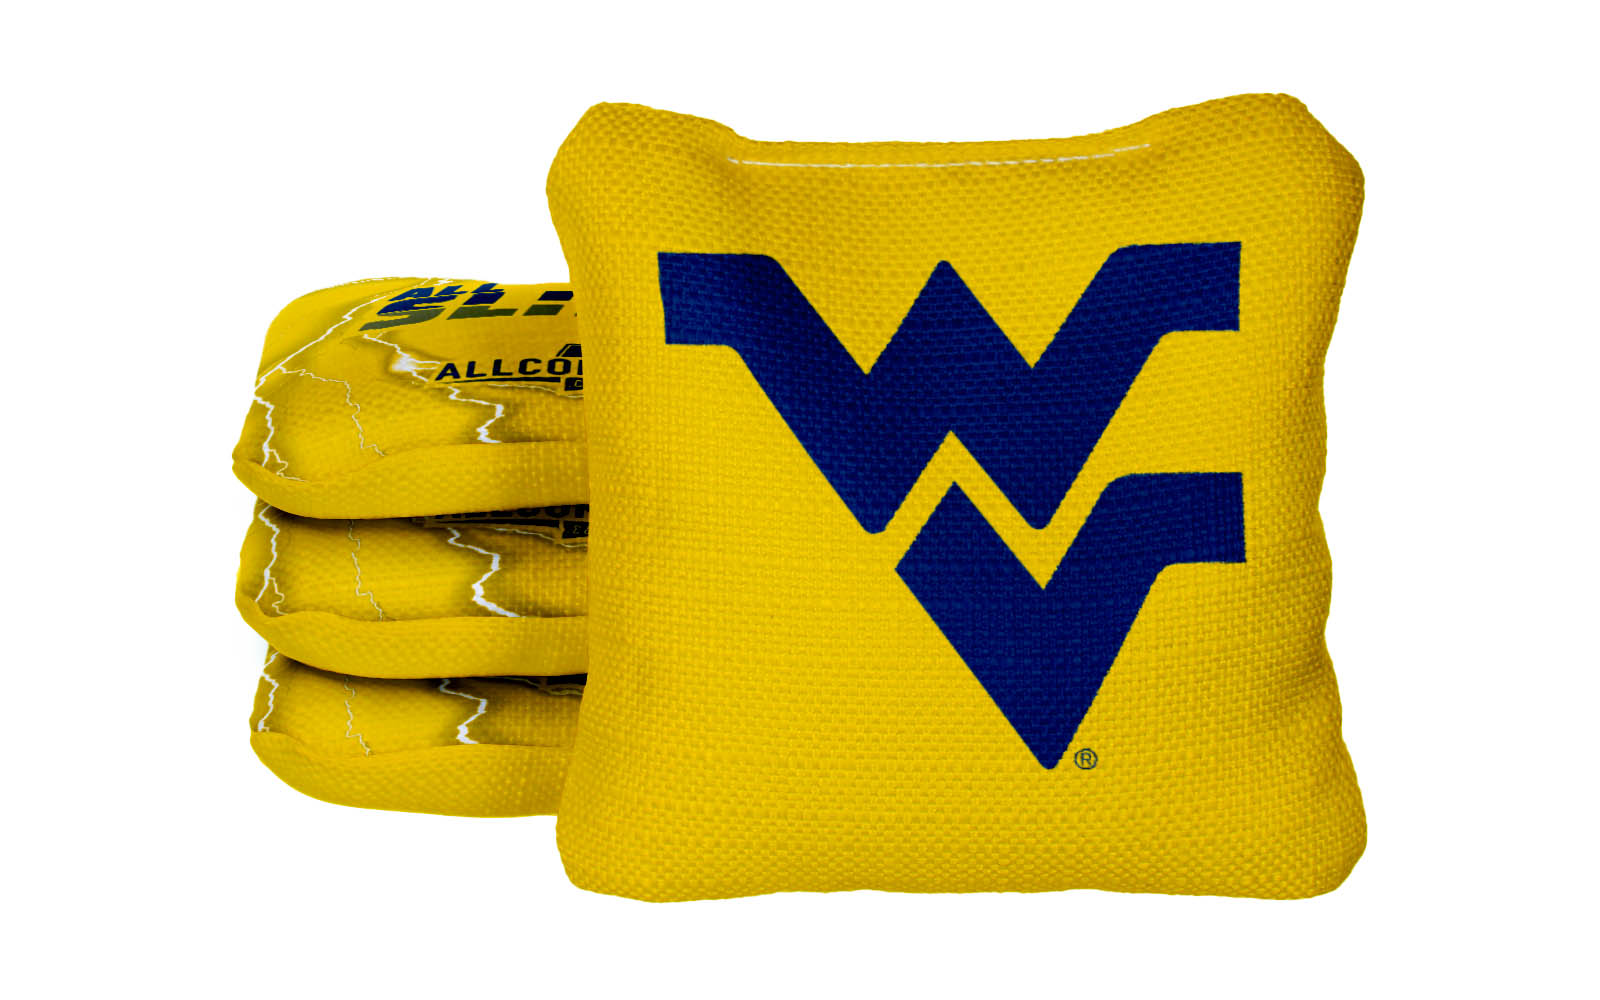 Officially Licensed Collegiate Cornhole Bags - All-Slide 2.0 - Set of 4 - West Virginia University